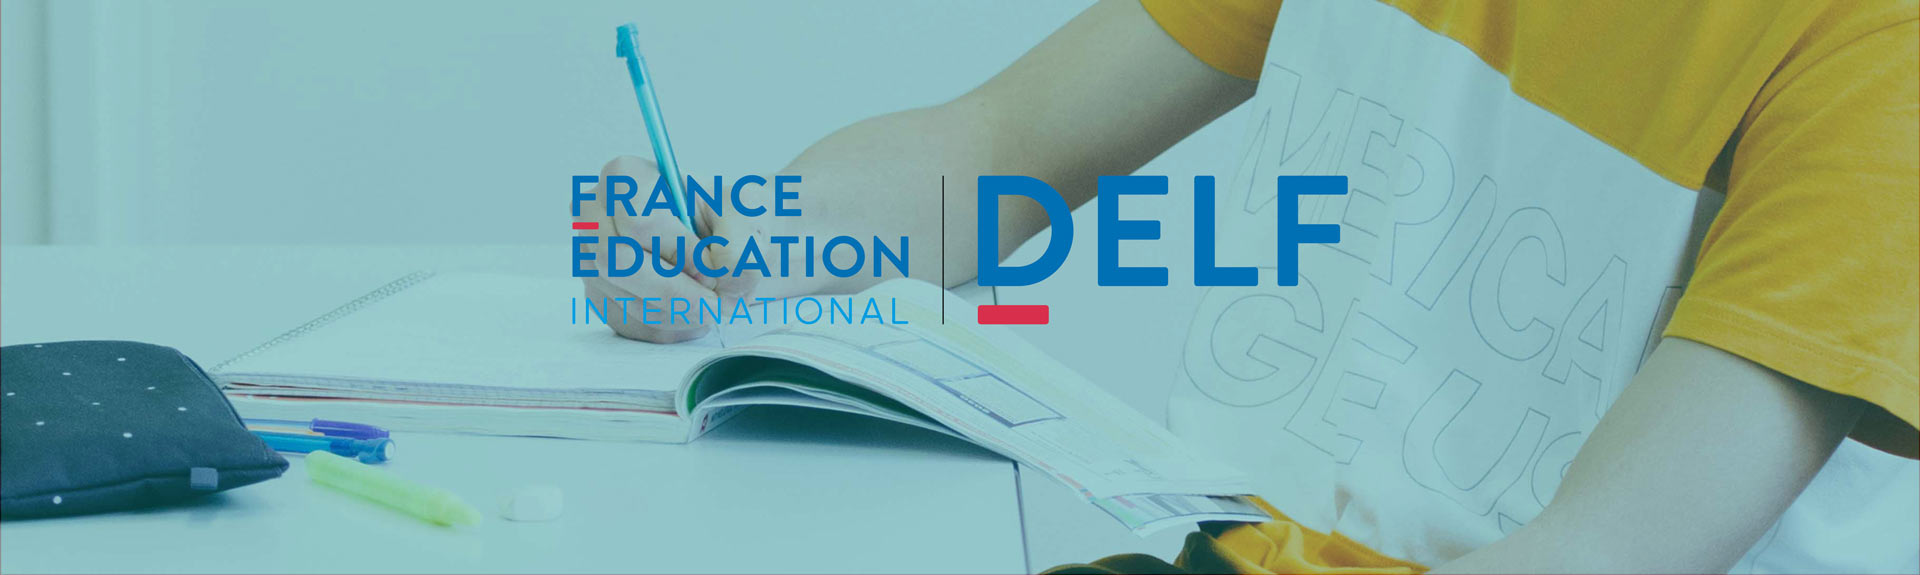 DELF - France education international